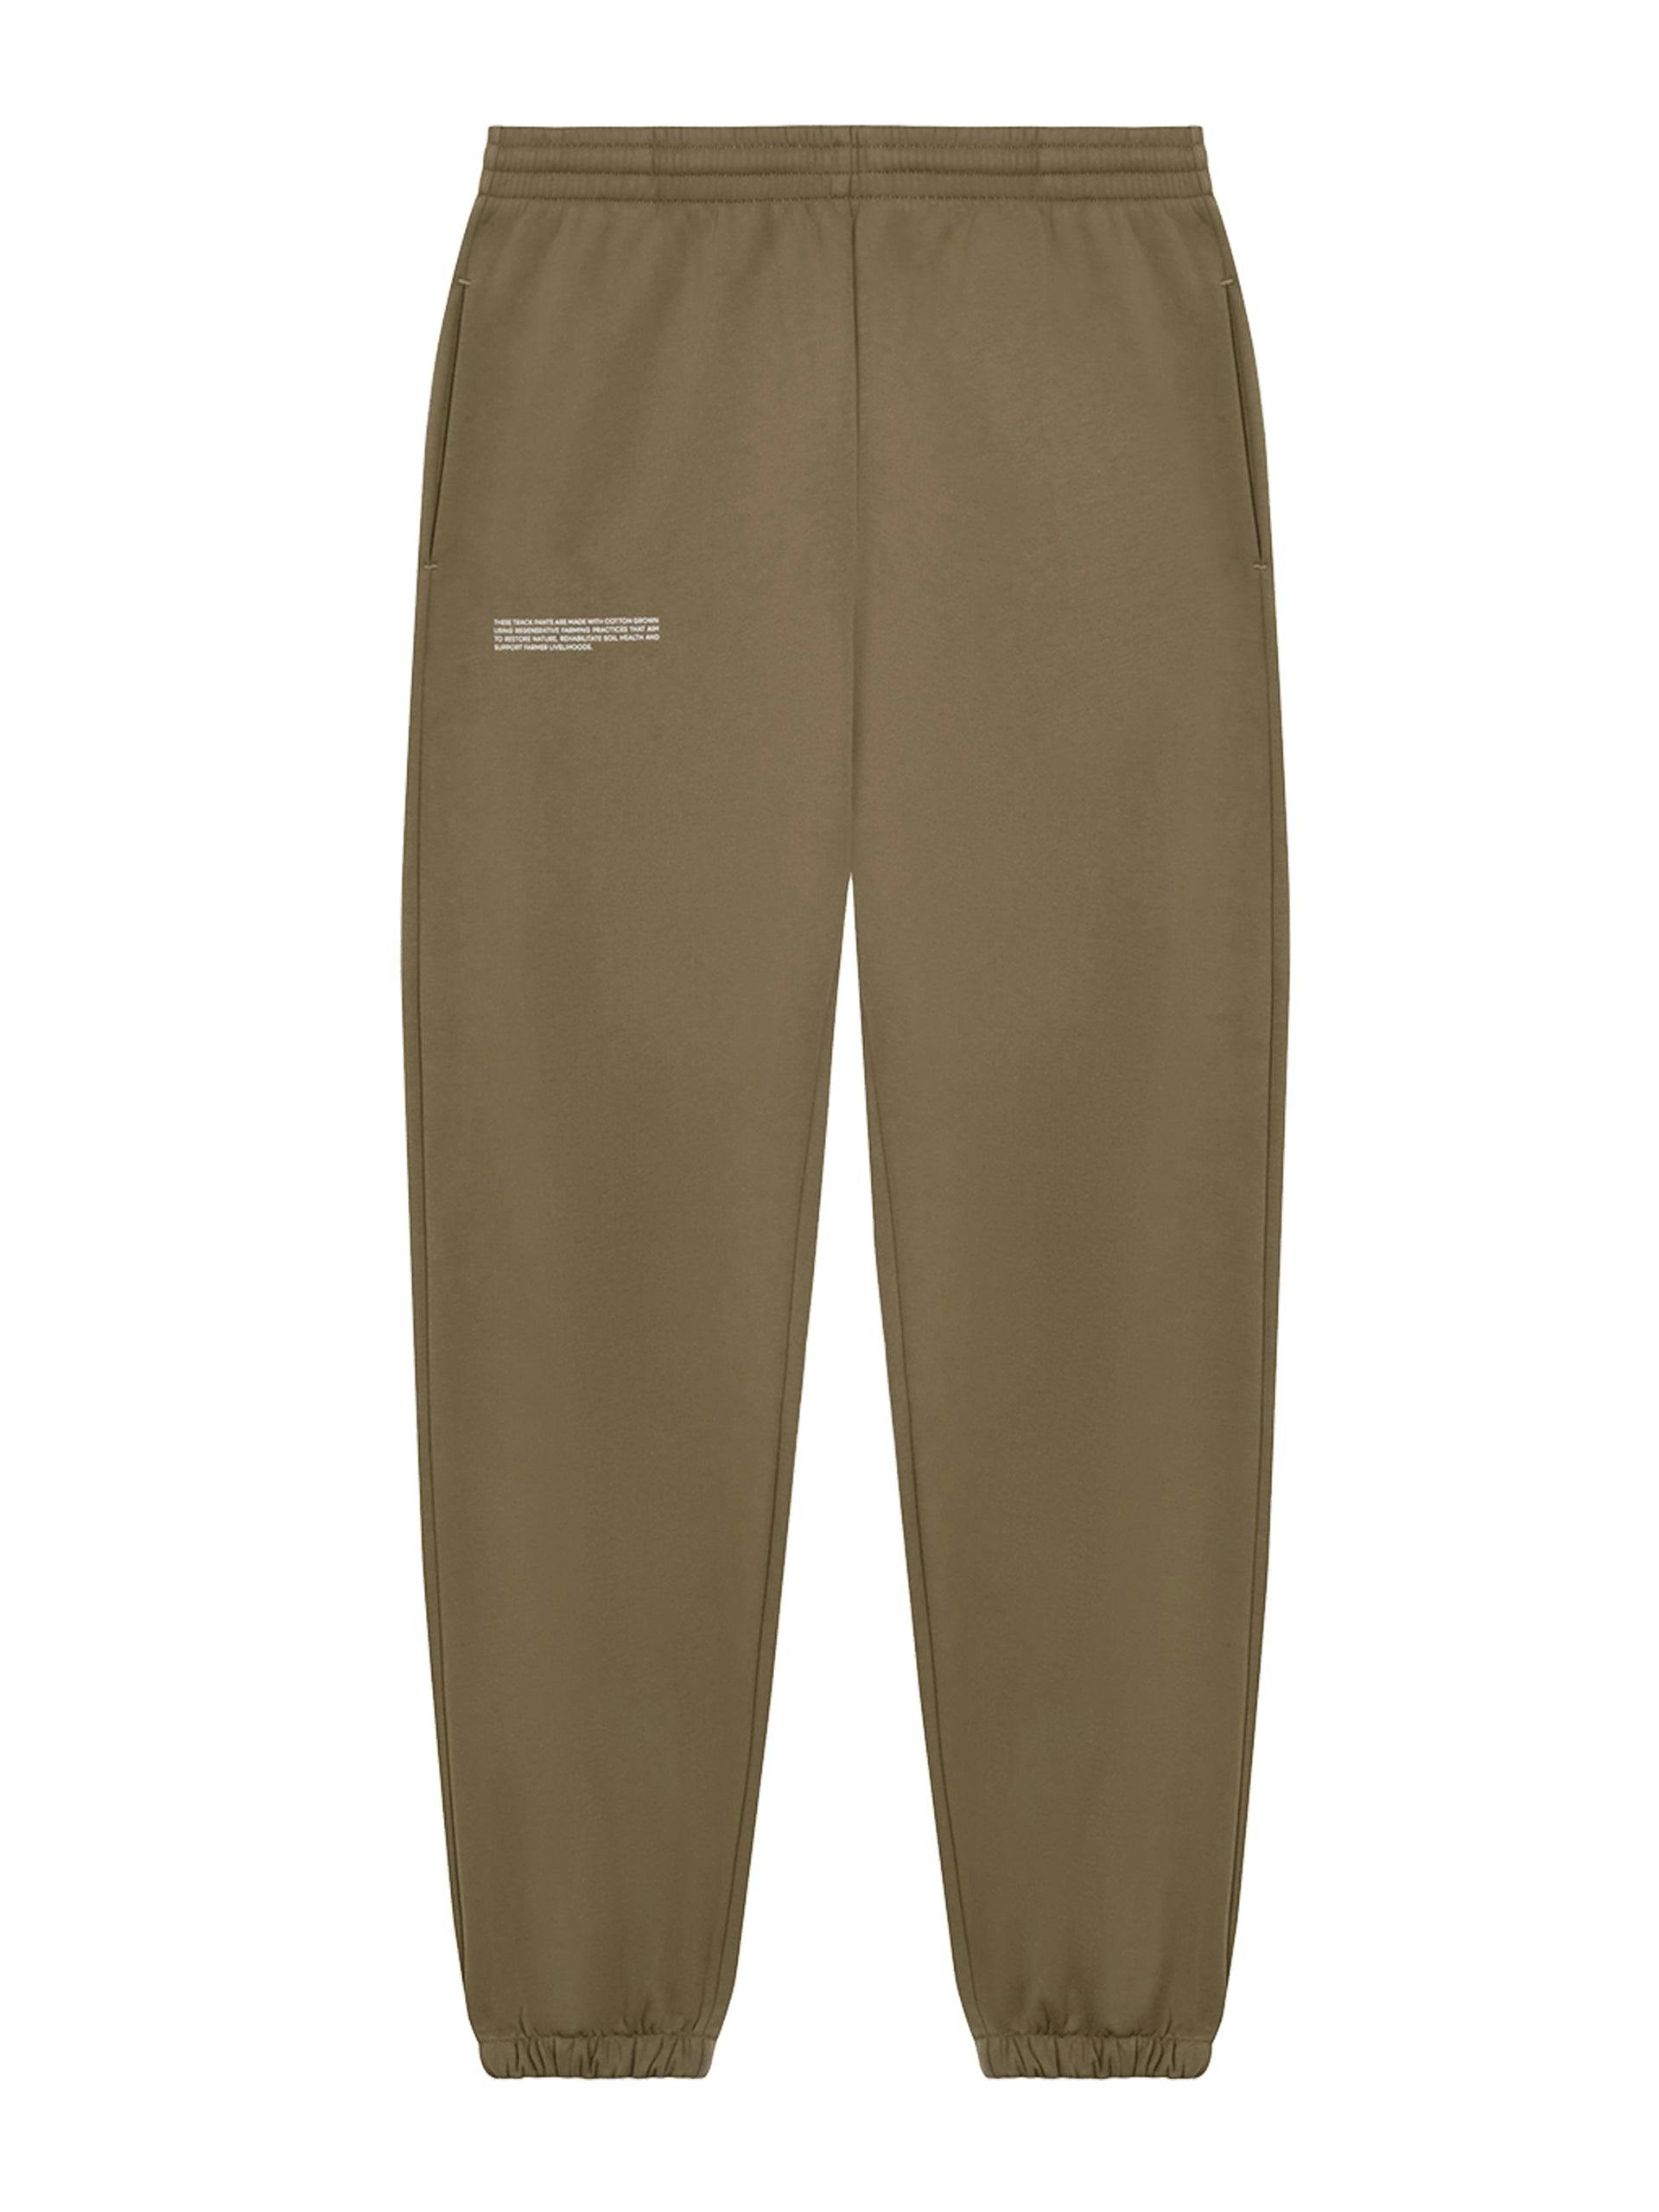 Brown cotton track pants